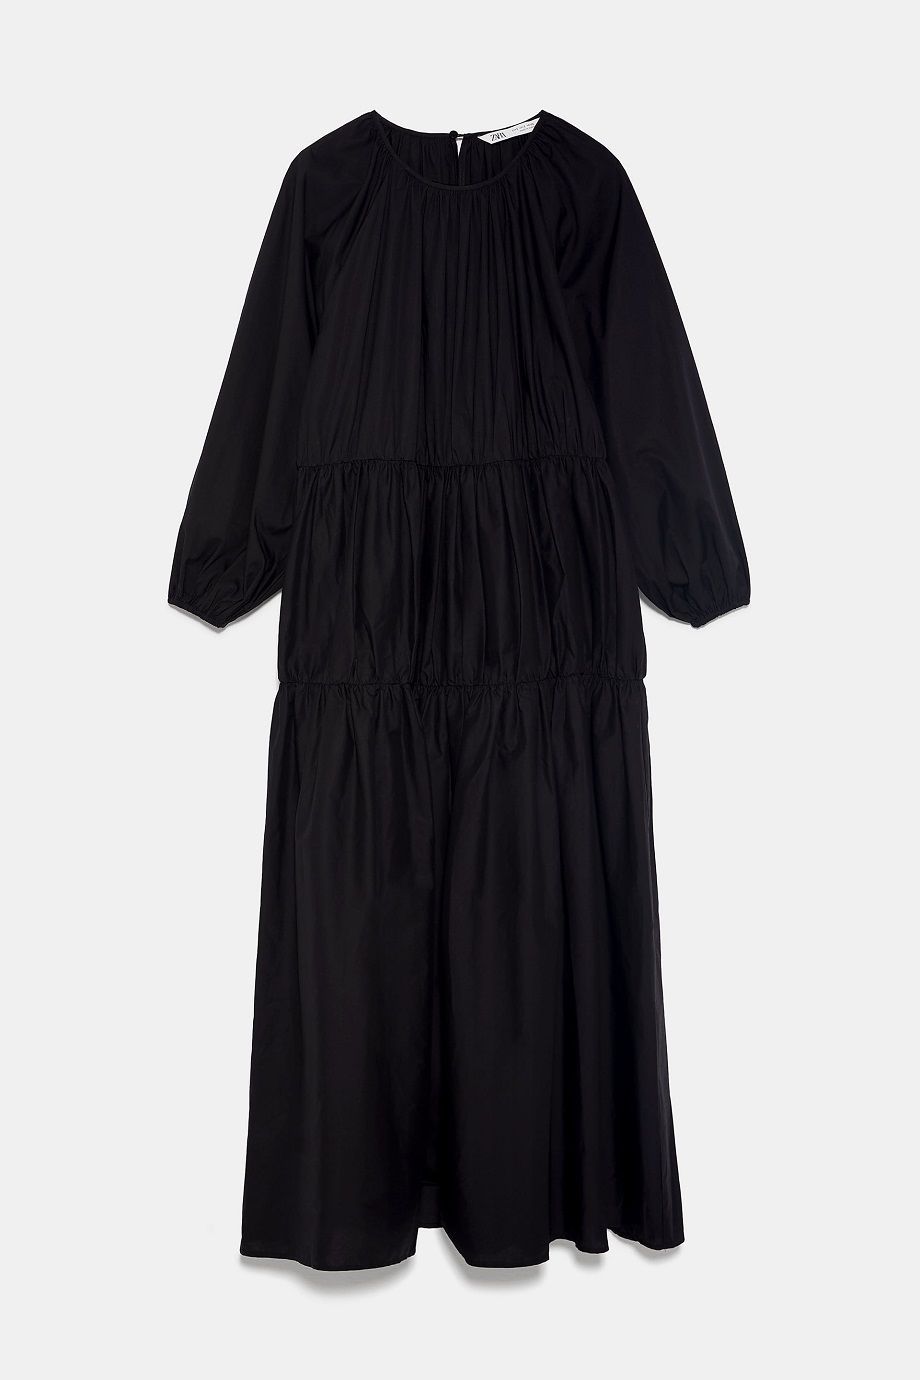 #PopbelaOOTD: Saatnya Investasikan Dress Baru untuk ke Kantor